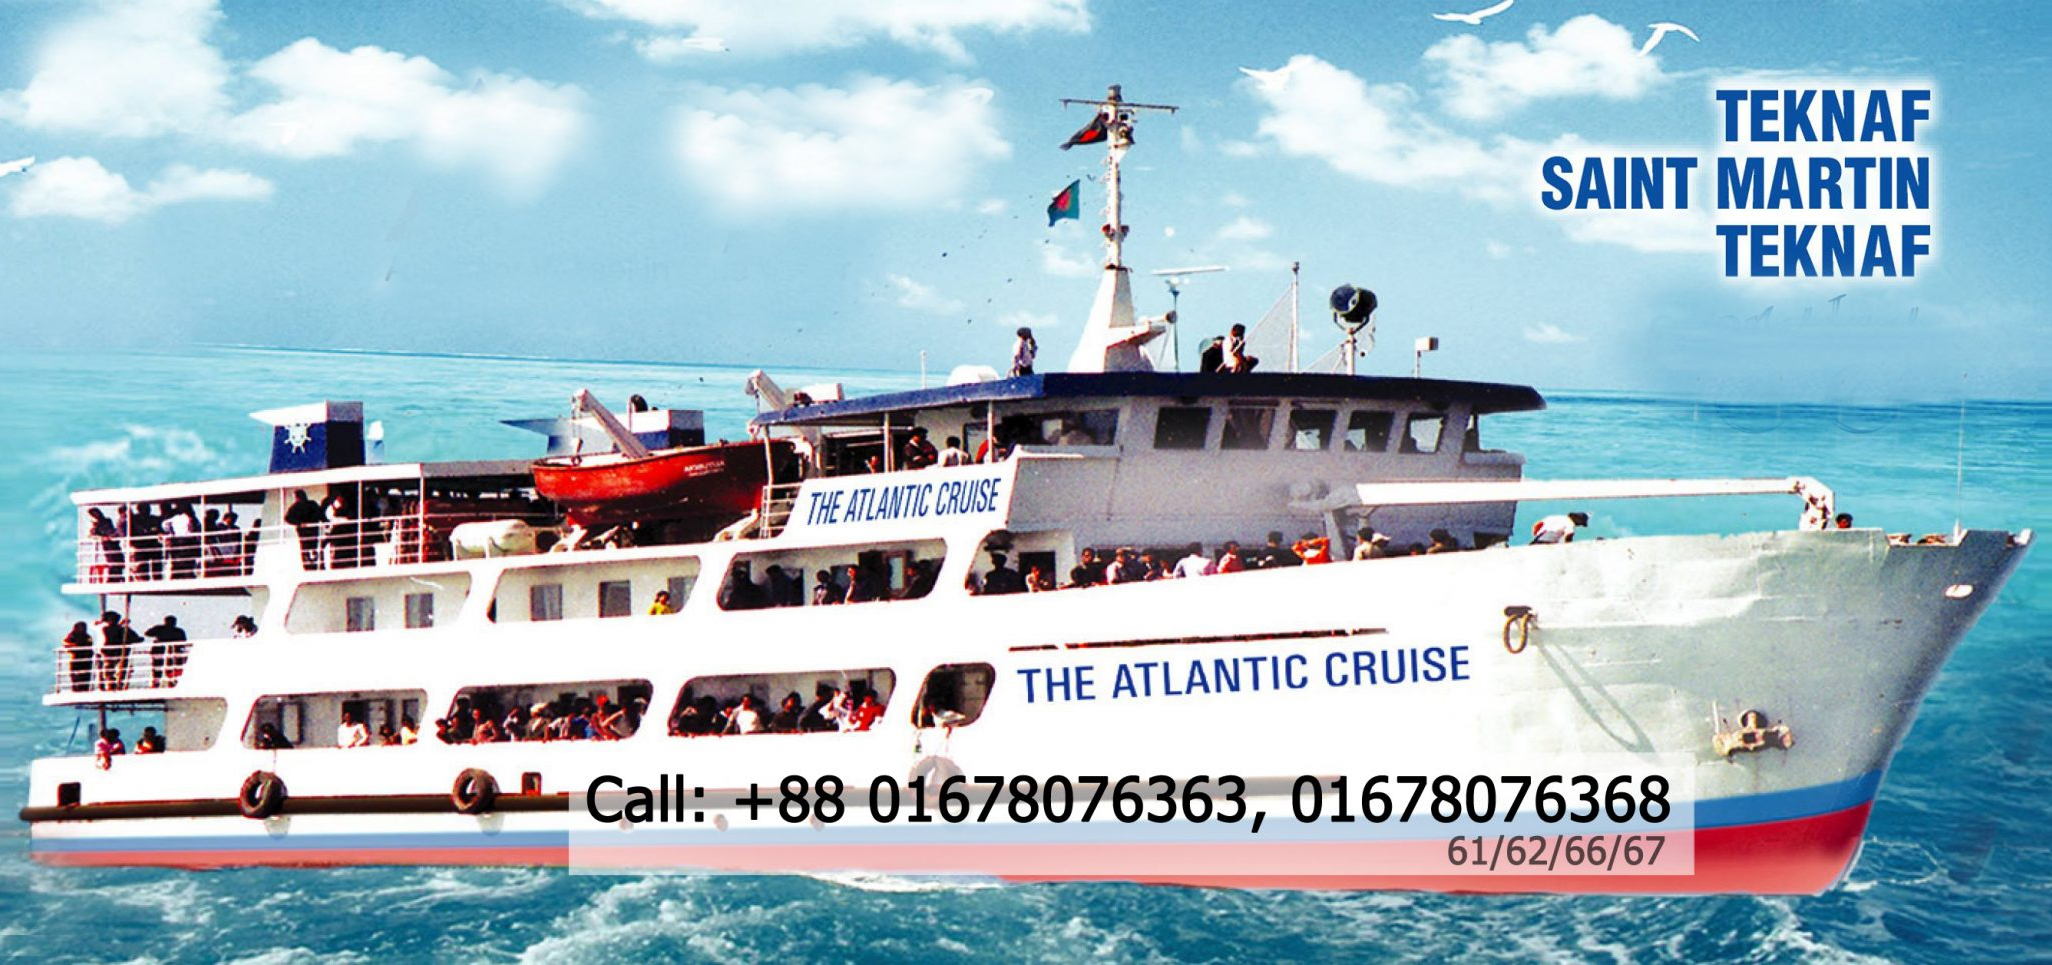 atlantic cruise online booking